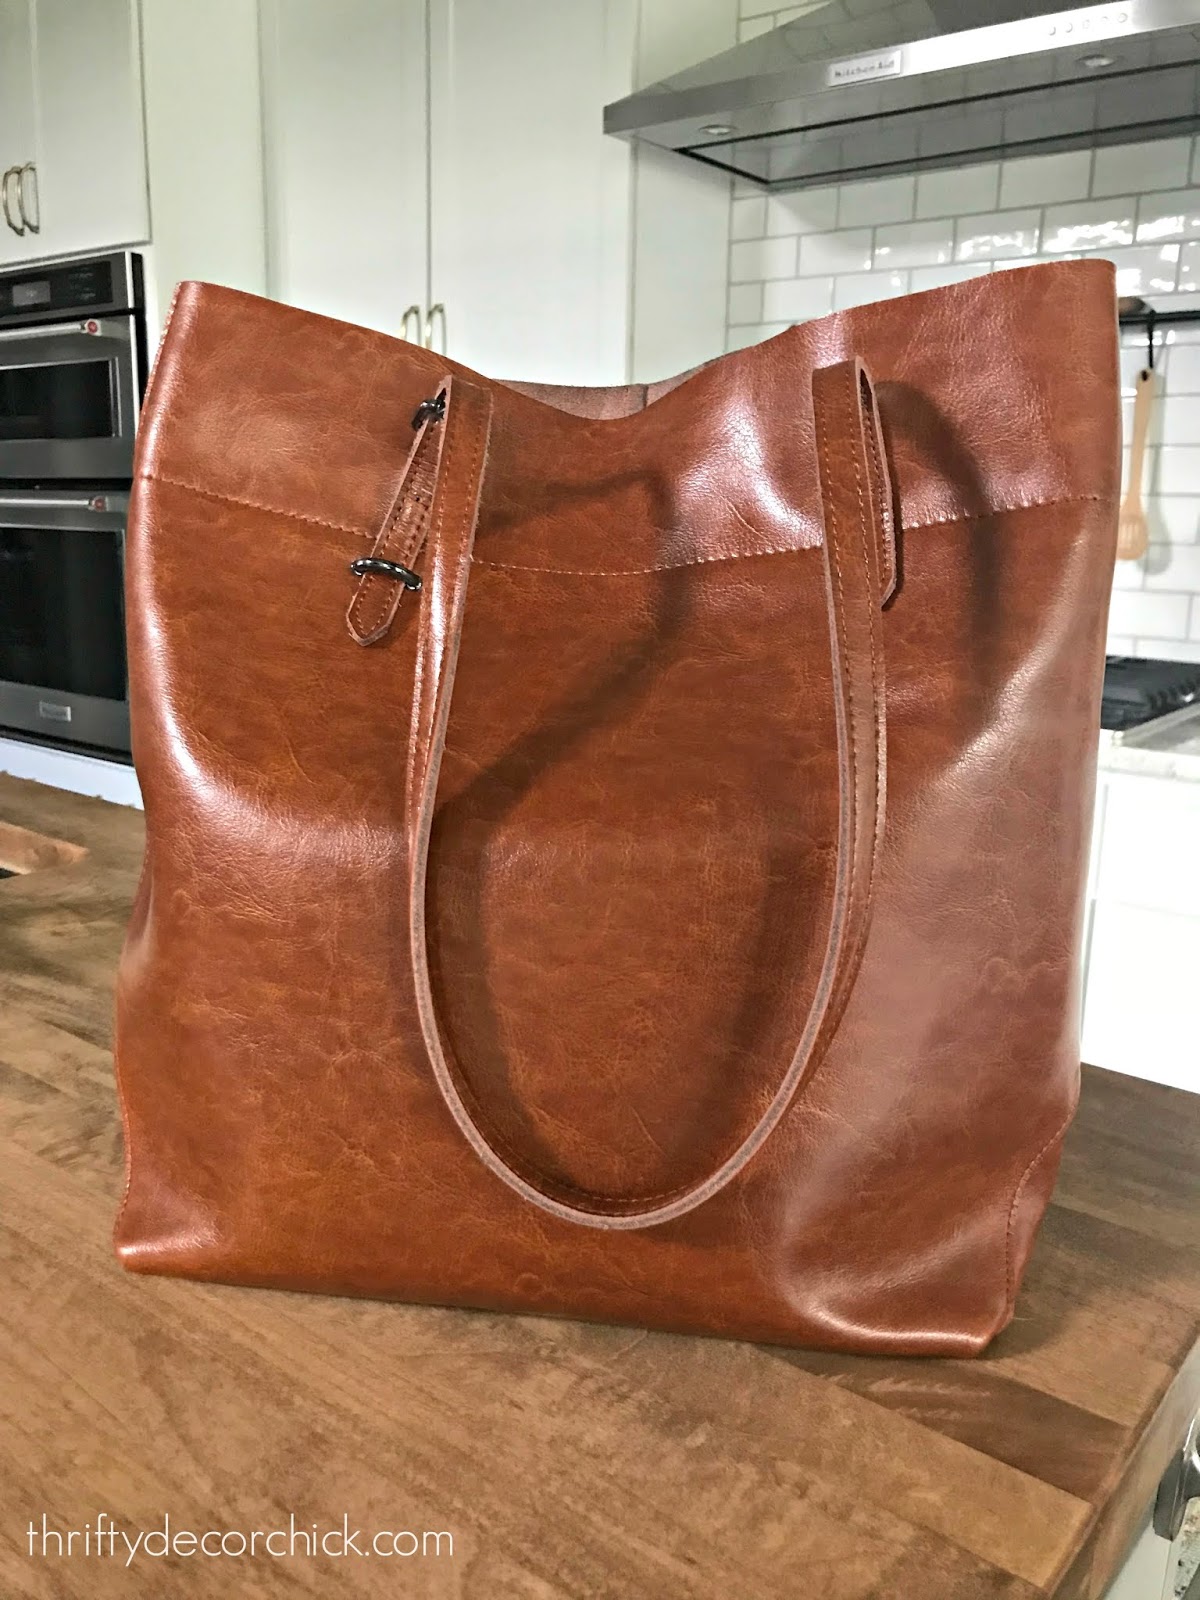 Best leather purse Amazon